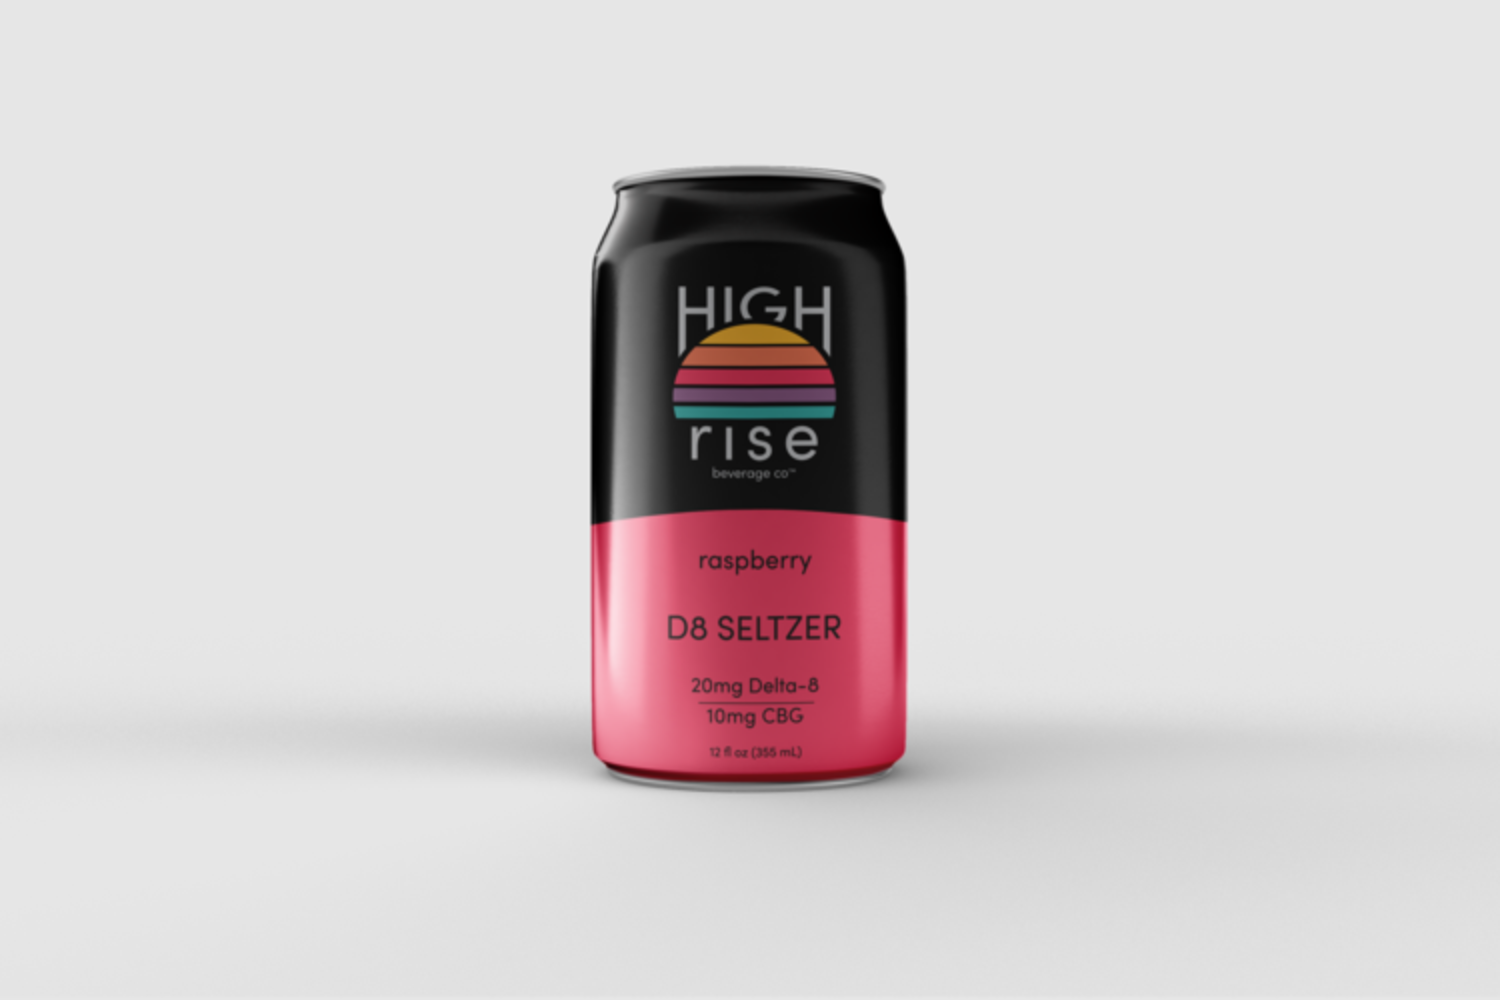 High Rise Delta-8 Seltzer